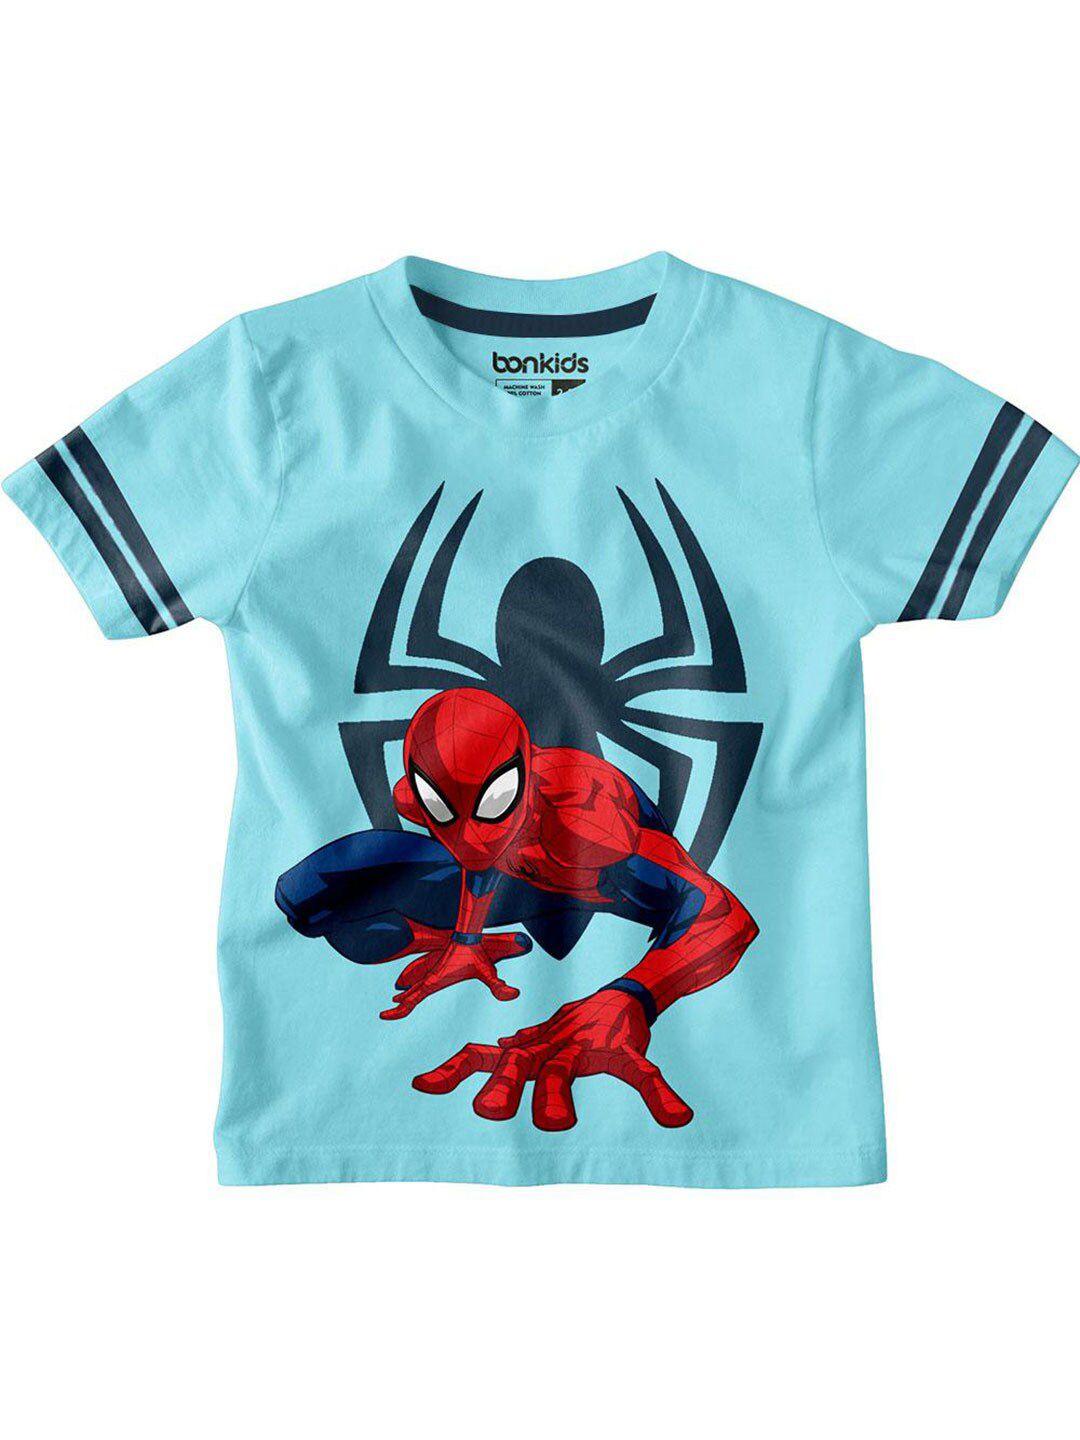 bonkids boys blue & red spiderman printed slim fit t-shirt